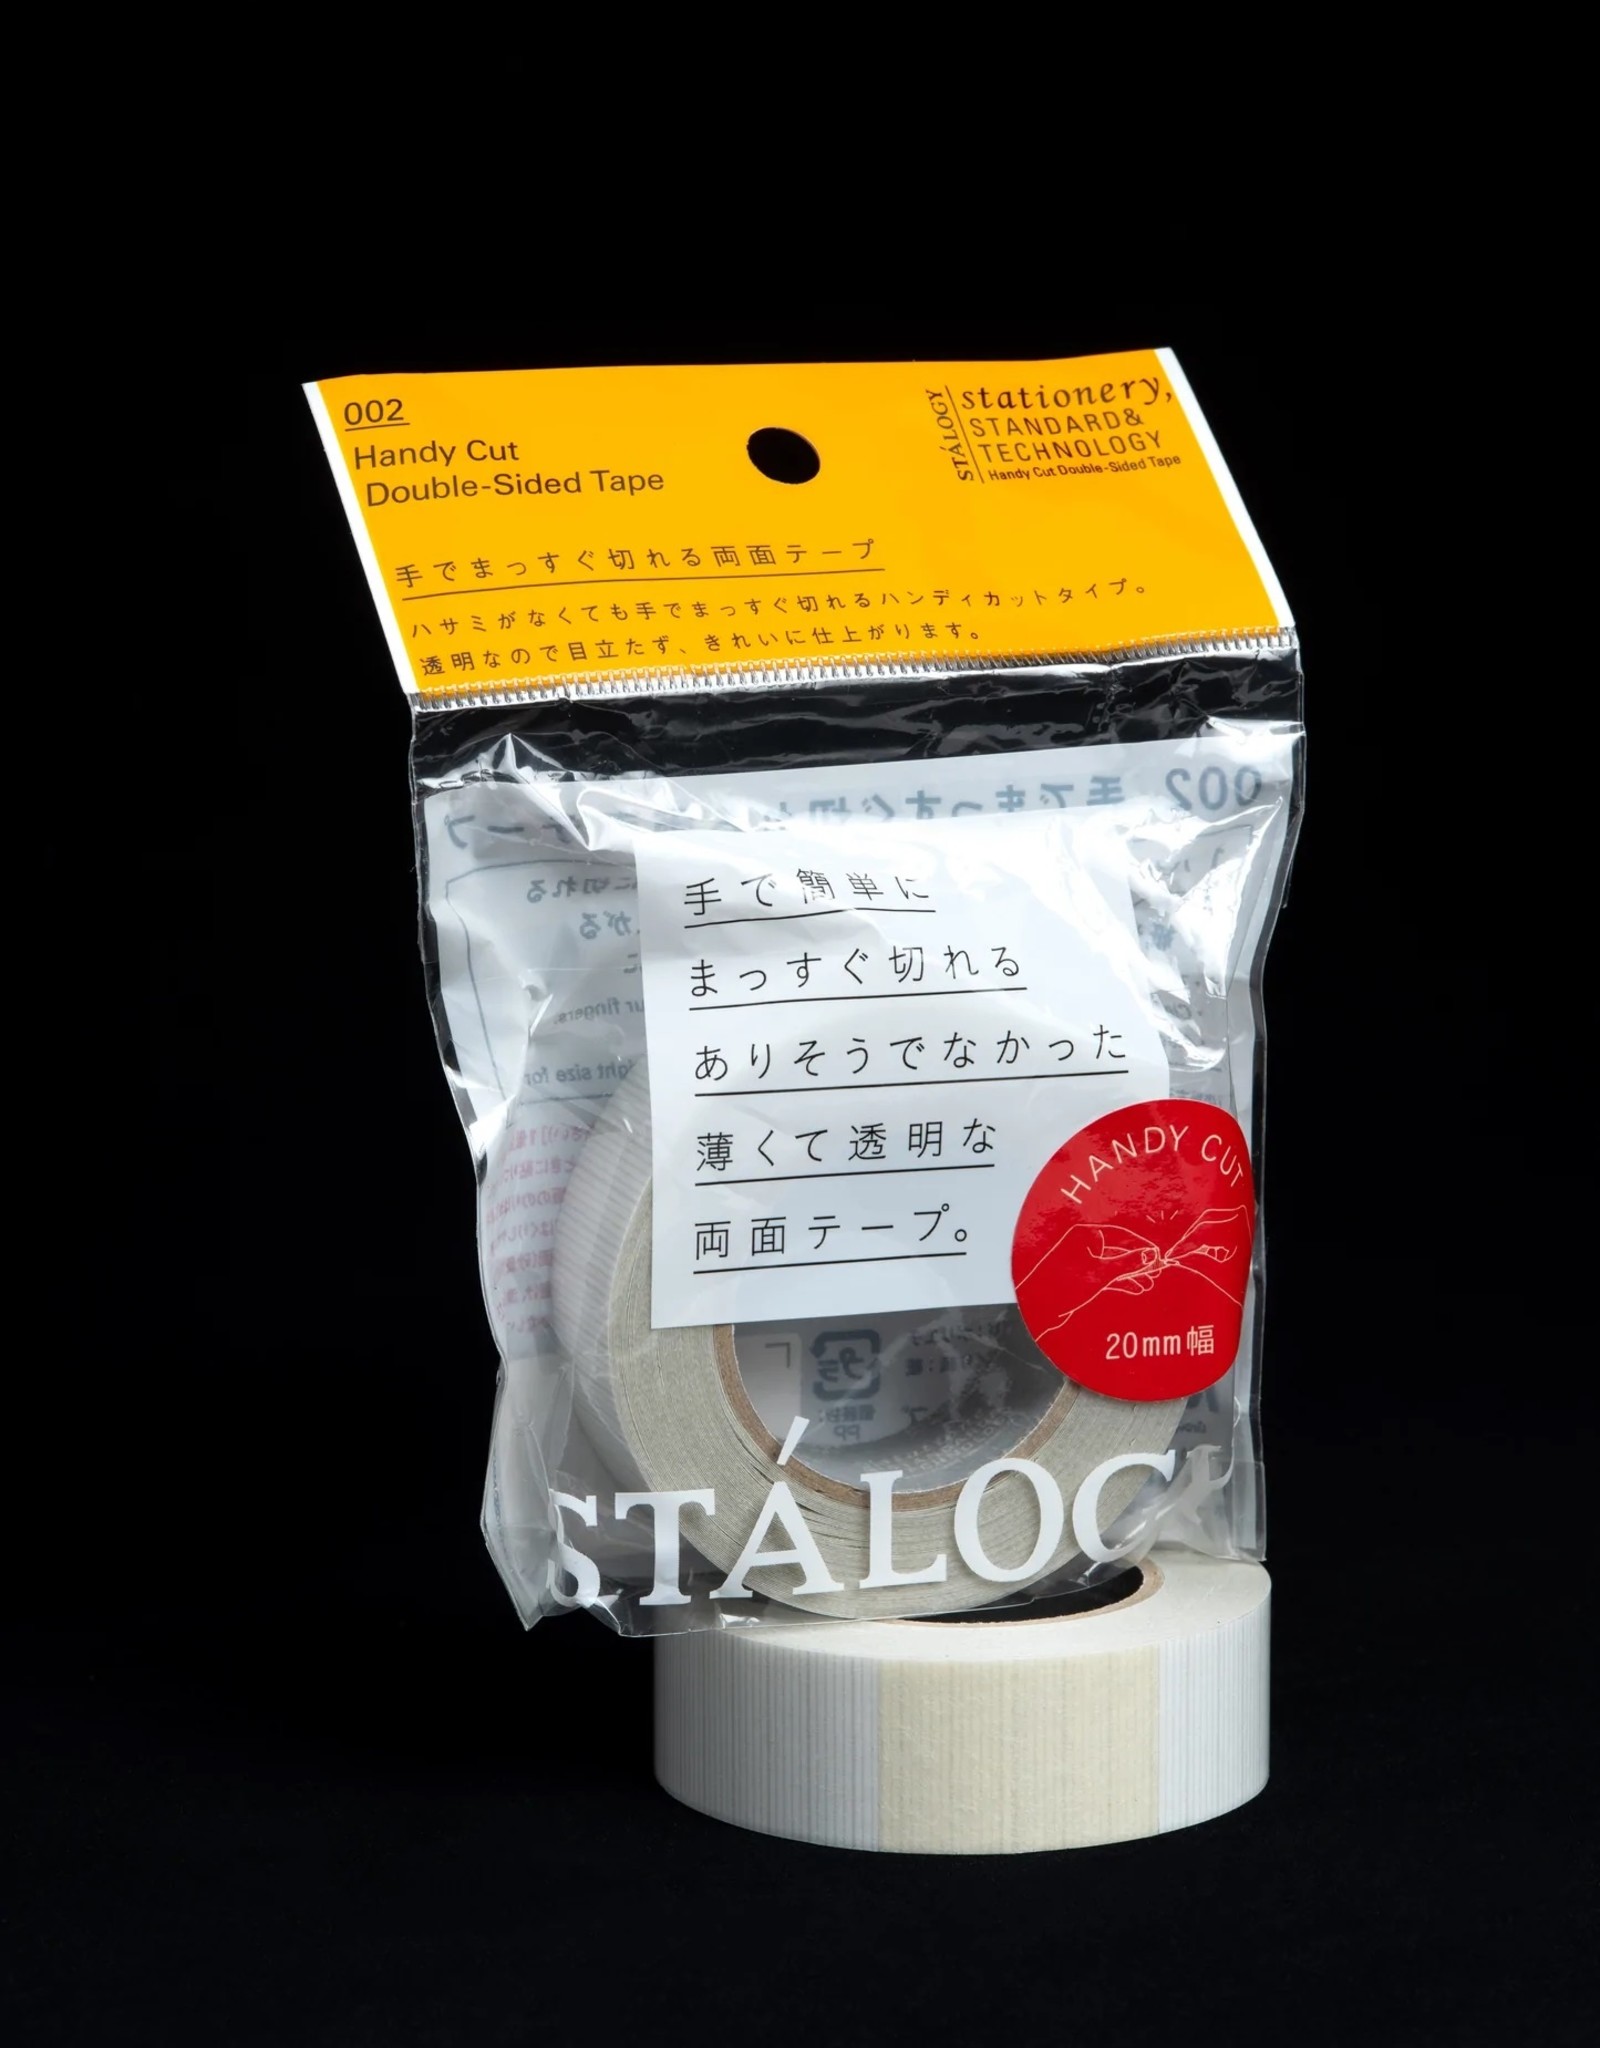 Stalogy Stalogy, Handy Cut Double-Sided Tape 20mm